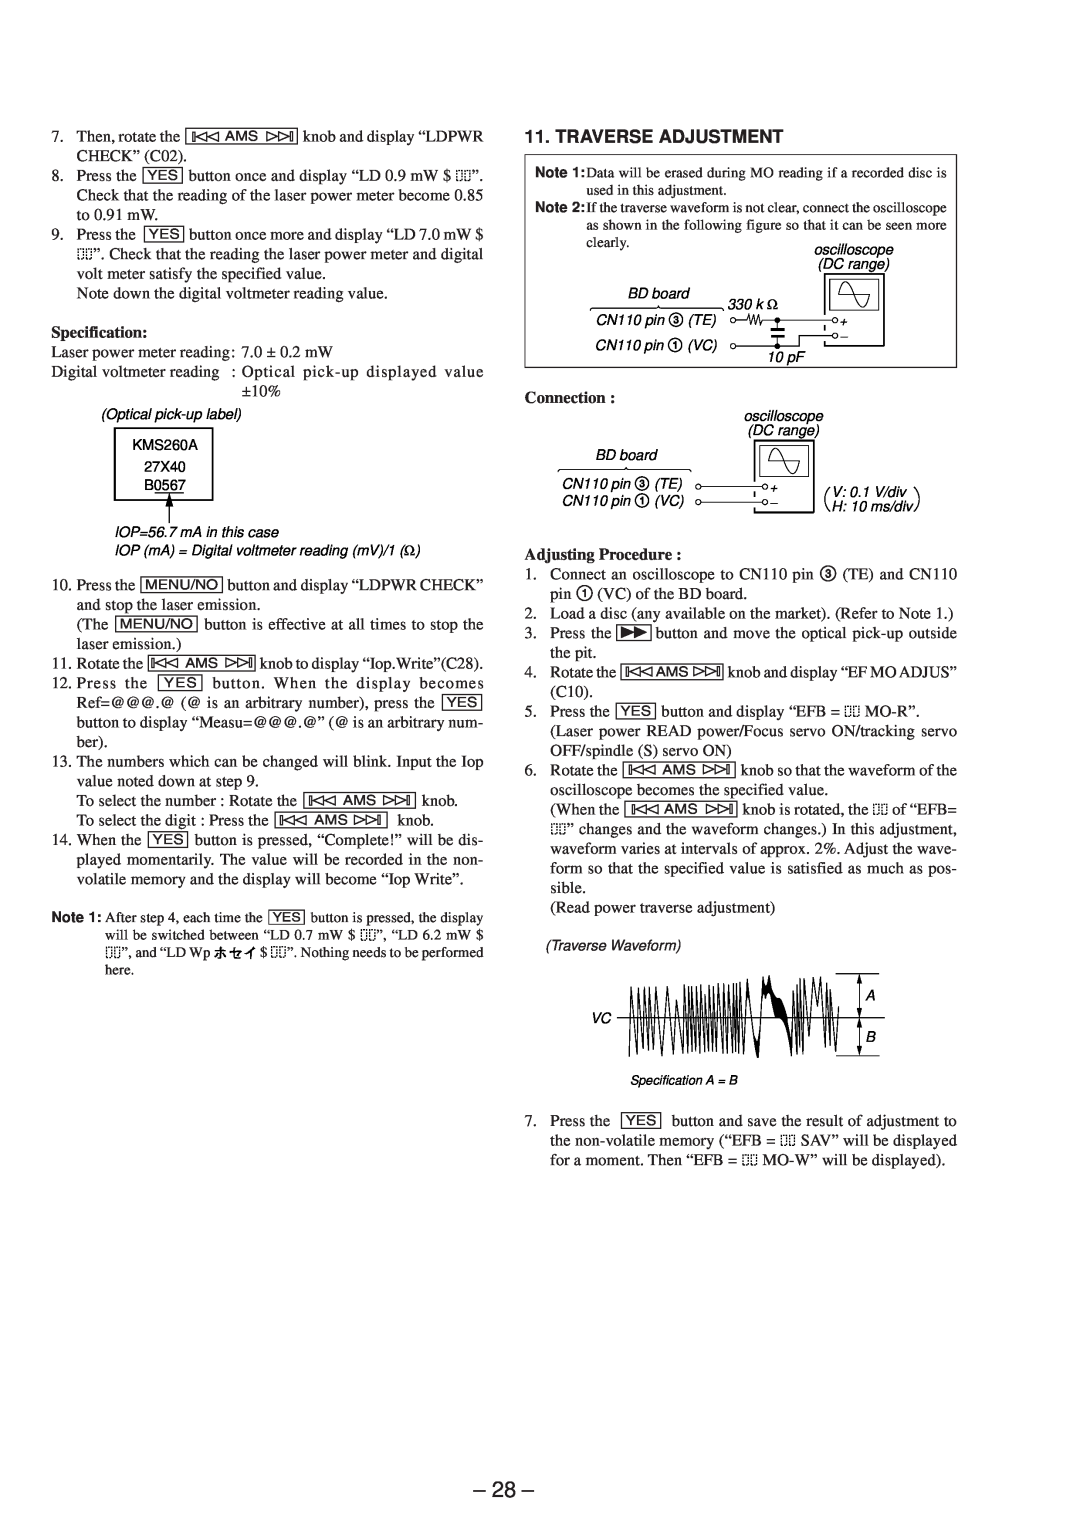 Sony MDS-JB920 service manual Traverse Adjustment, Specification, Connection, Adjusting Procedure 